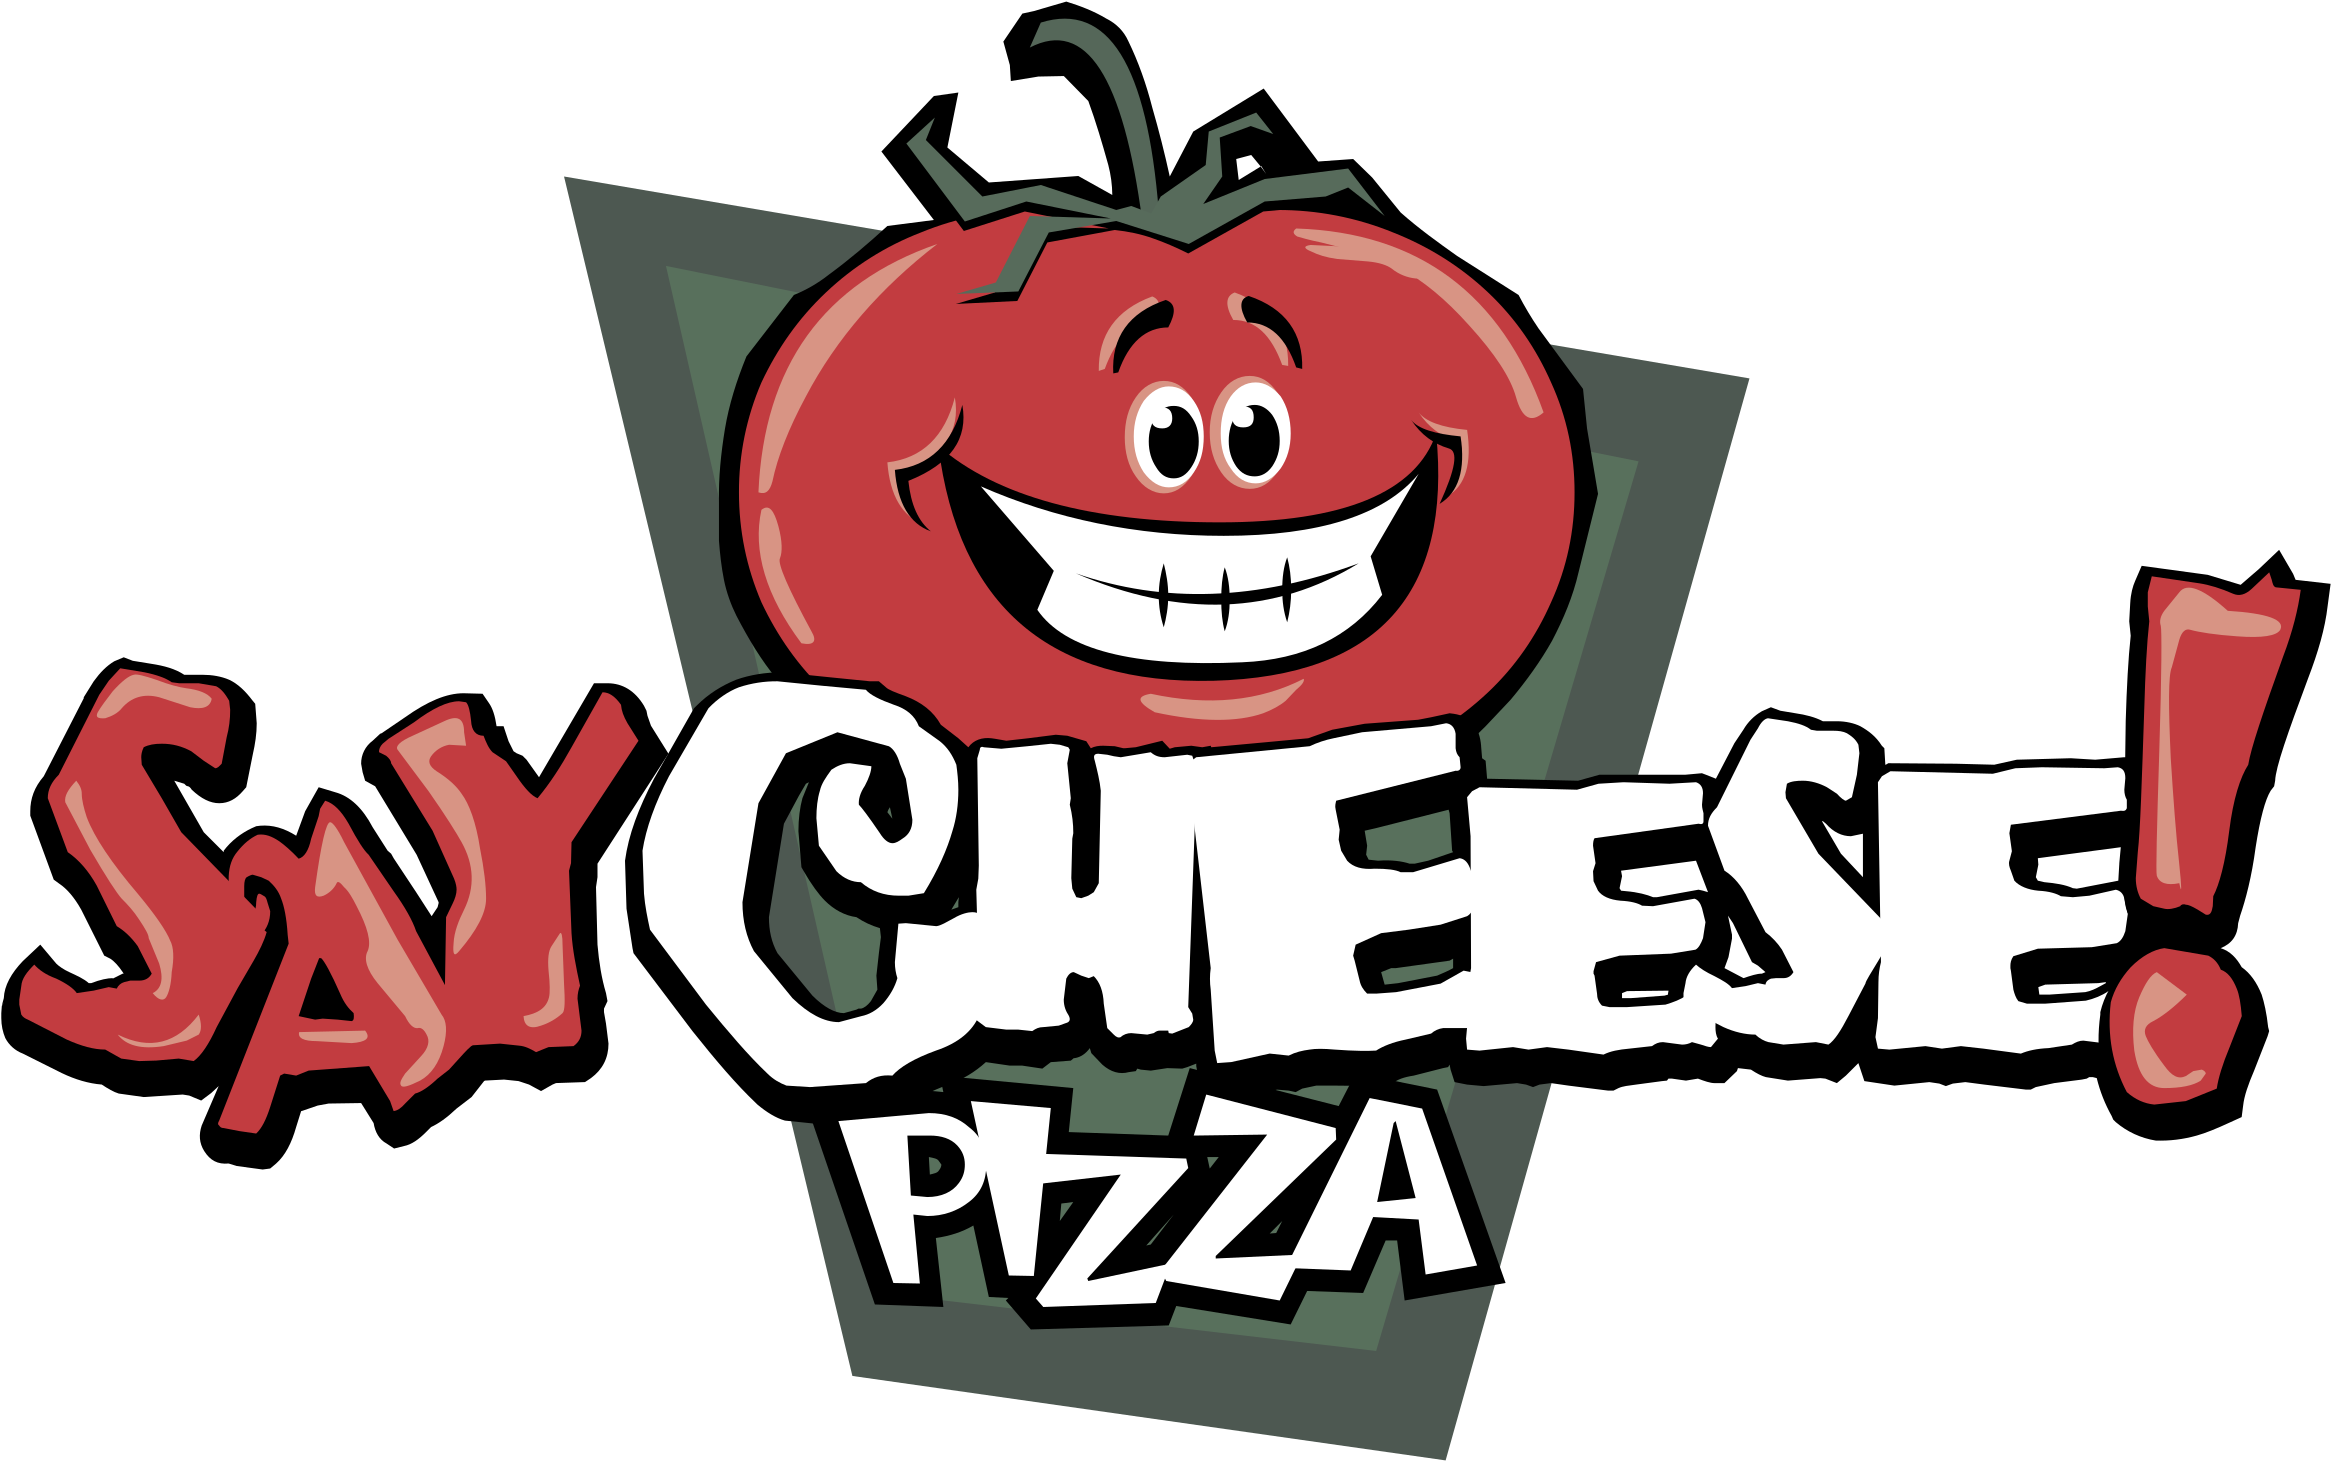 Pizza Logos - Say Cheese Pizza (2400x2400)